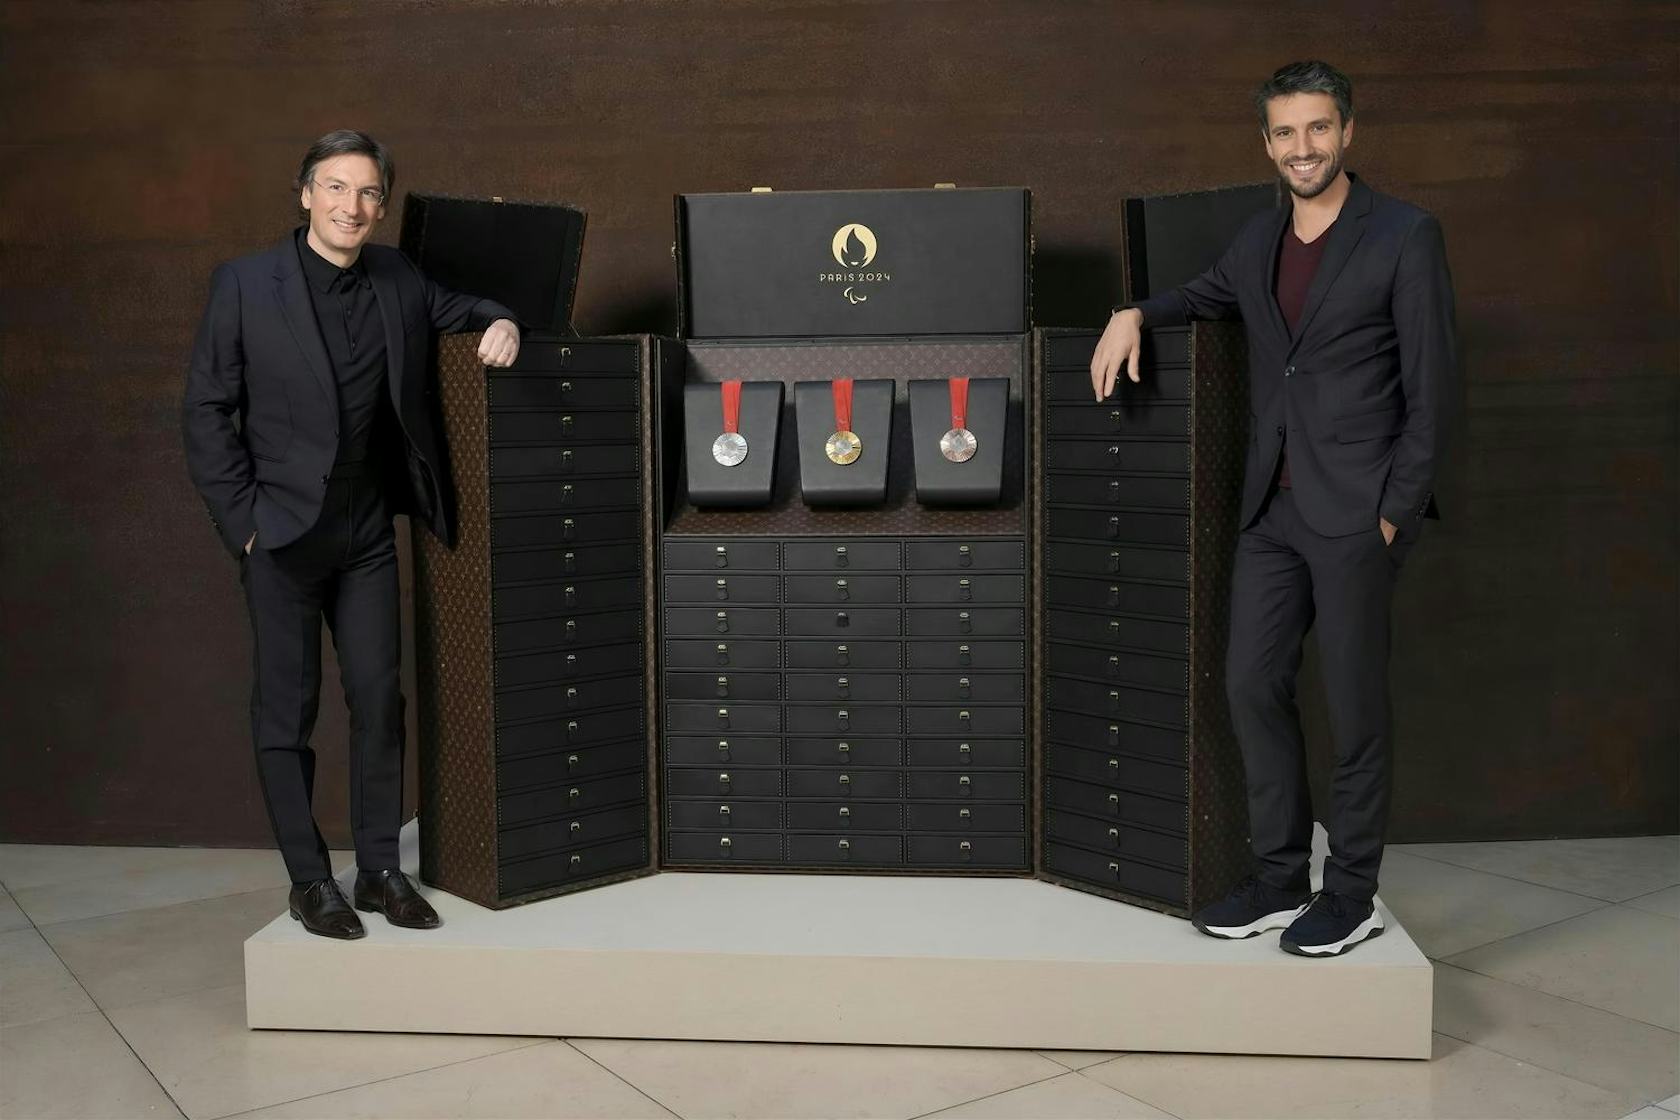 Louis Vuitton: Luxury trunks for Paris 2024 Olympics